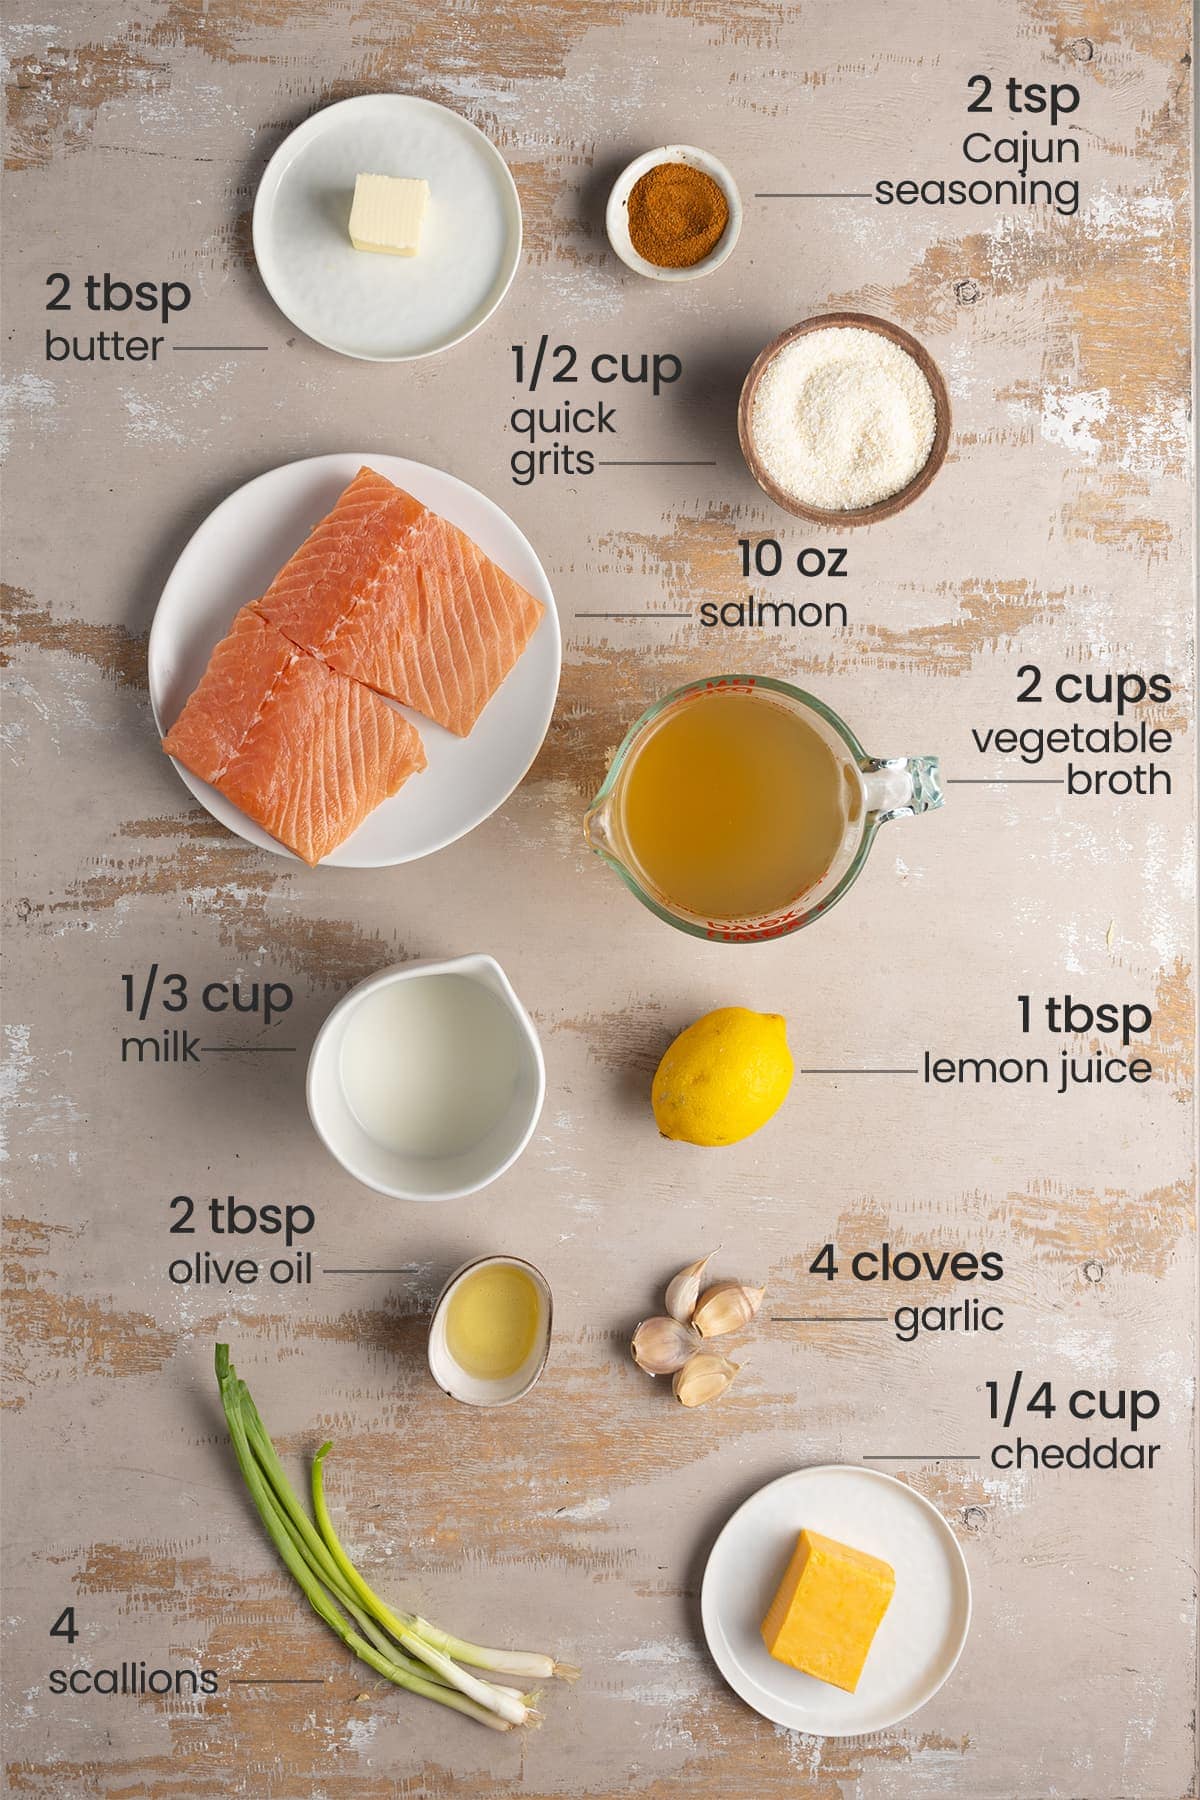 Ingredients for Creamy Cajun Salmon and Grits - butter, quick grits, Cajun seasoning, salmon, milk, vegetable broth, lemon juice, olive oil, garlic, cheddar, scallions